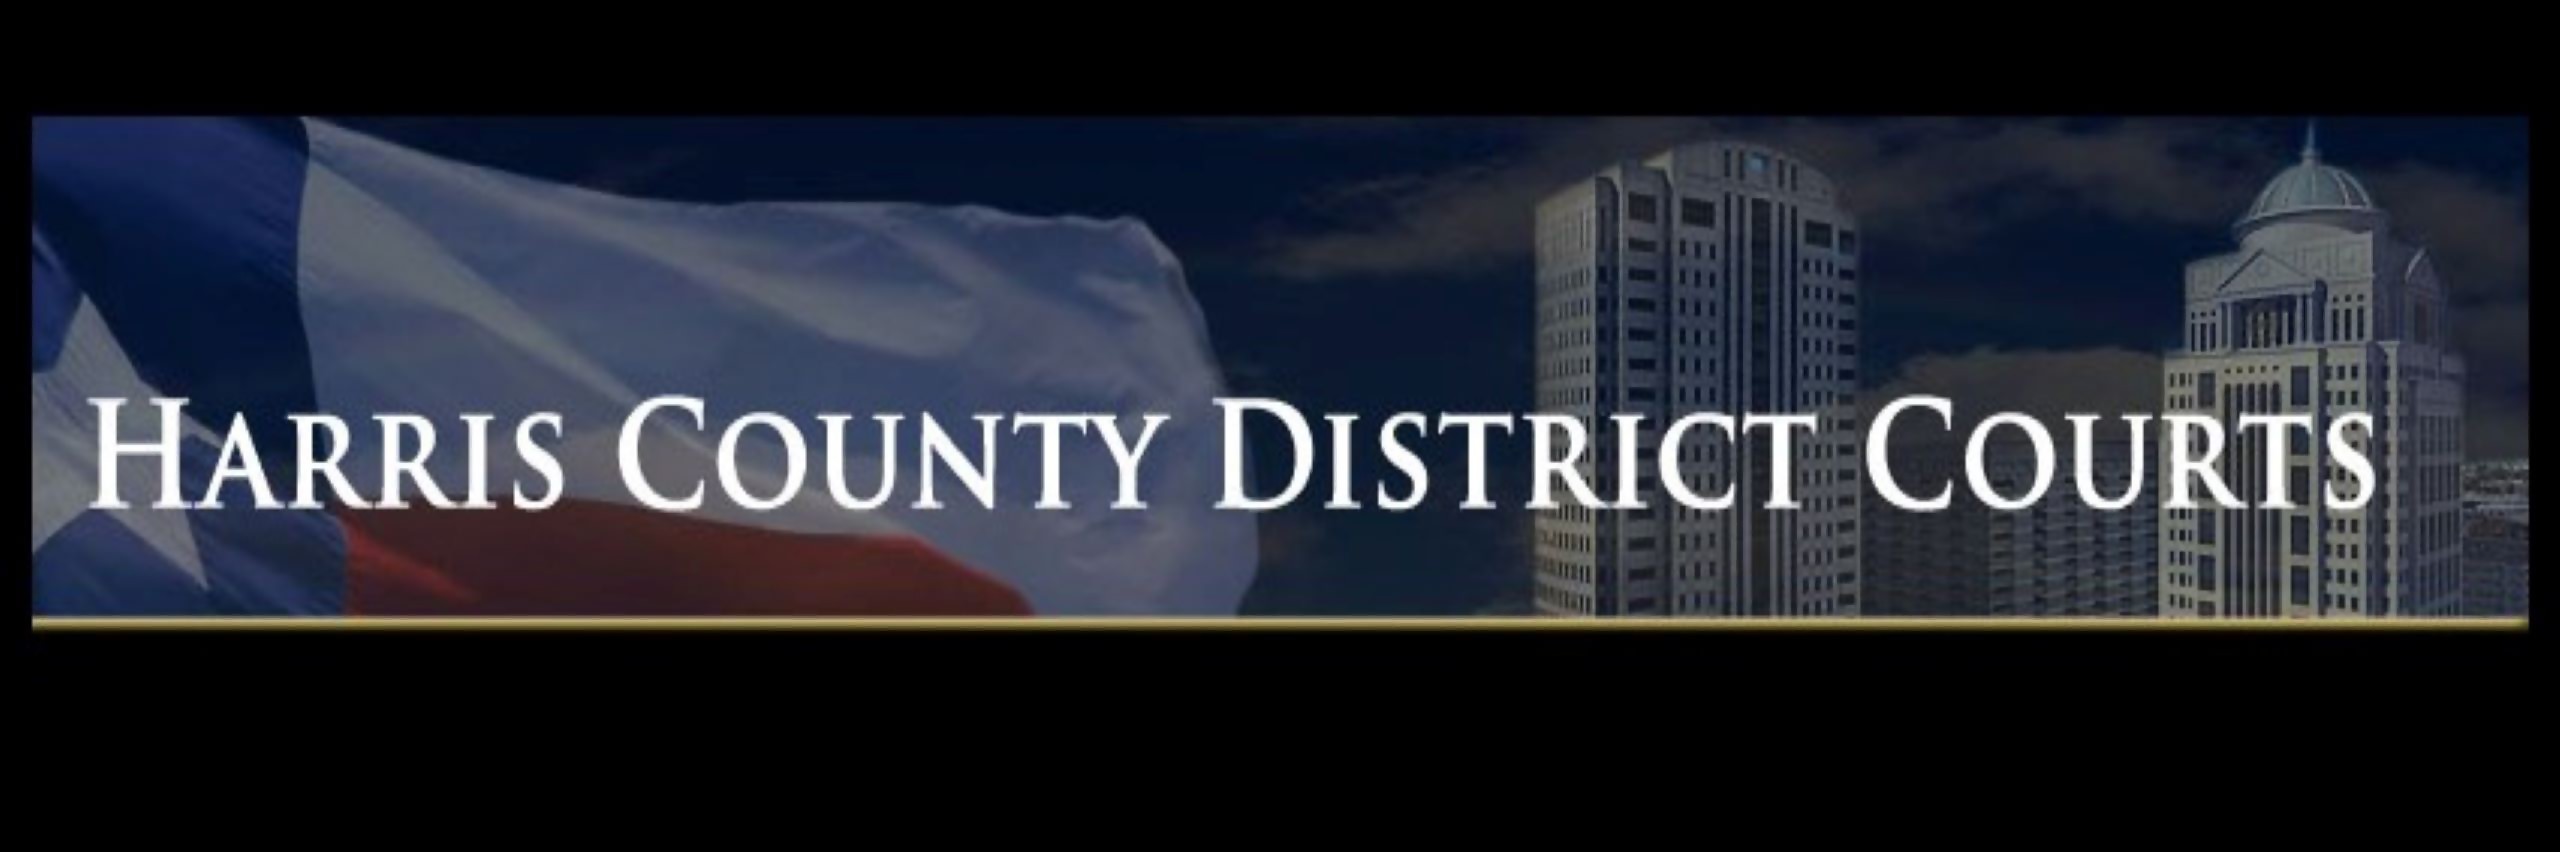 151st District Court - Live Stream